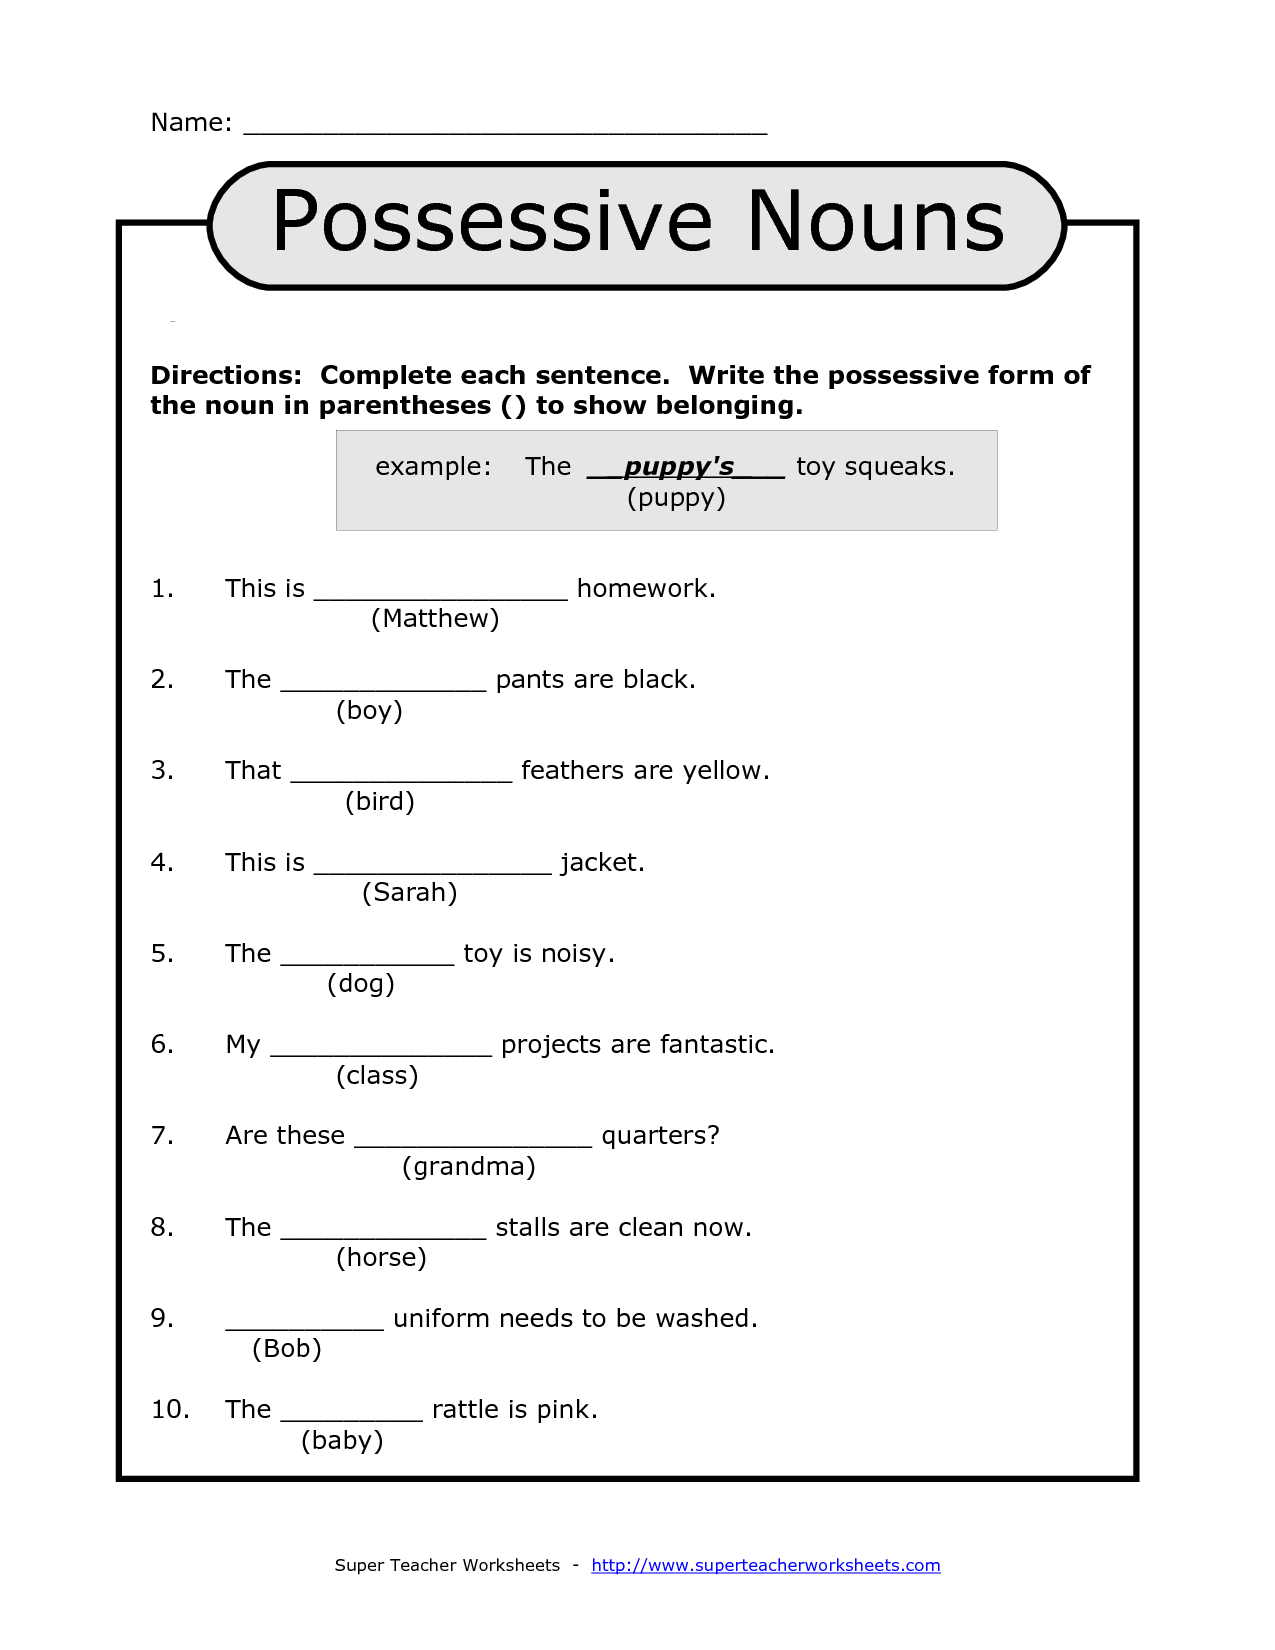 17 Best Images Of Worksheets Possessive Nouns Plural Possessive Nouns Worksheets Possessive 